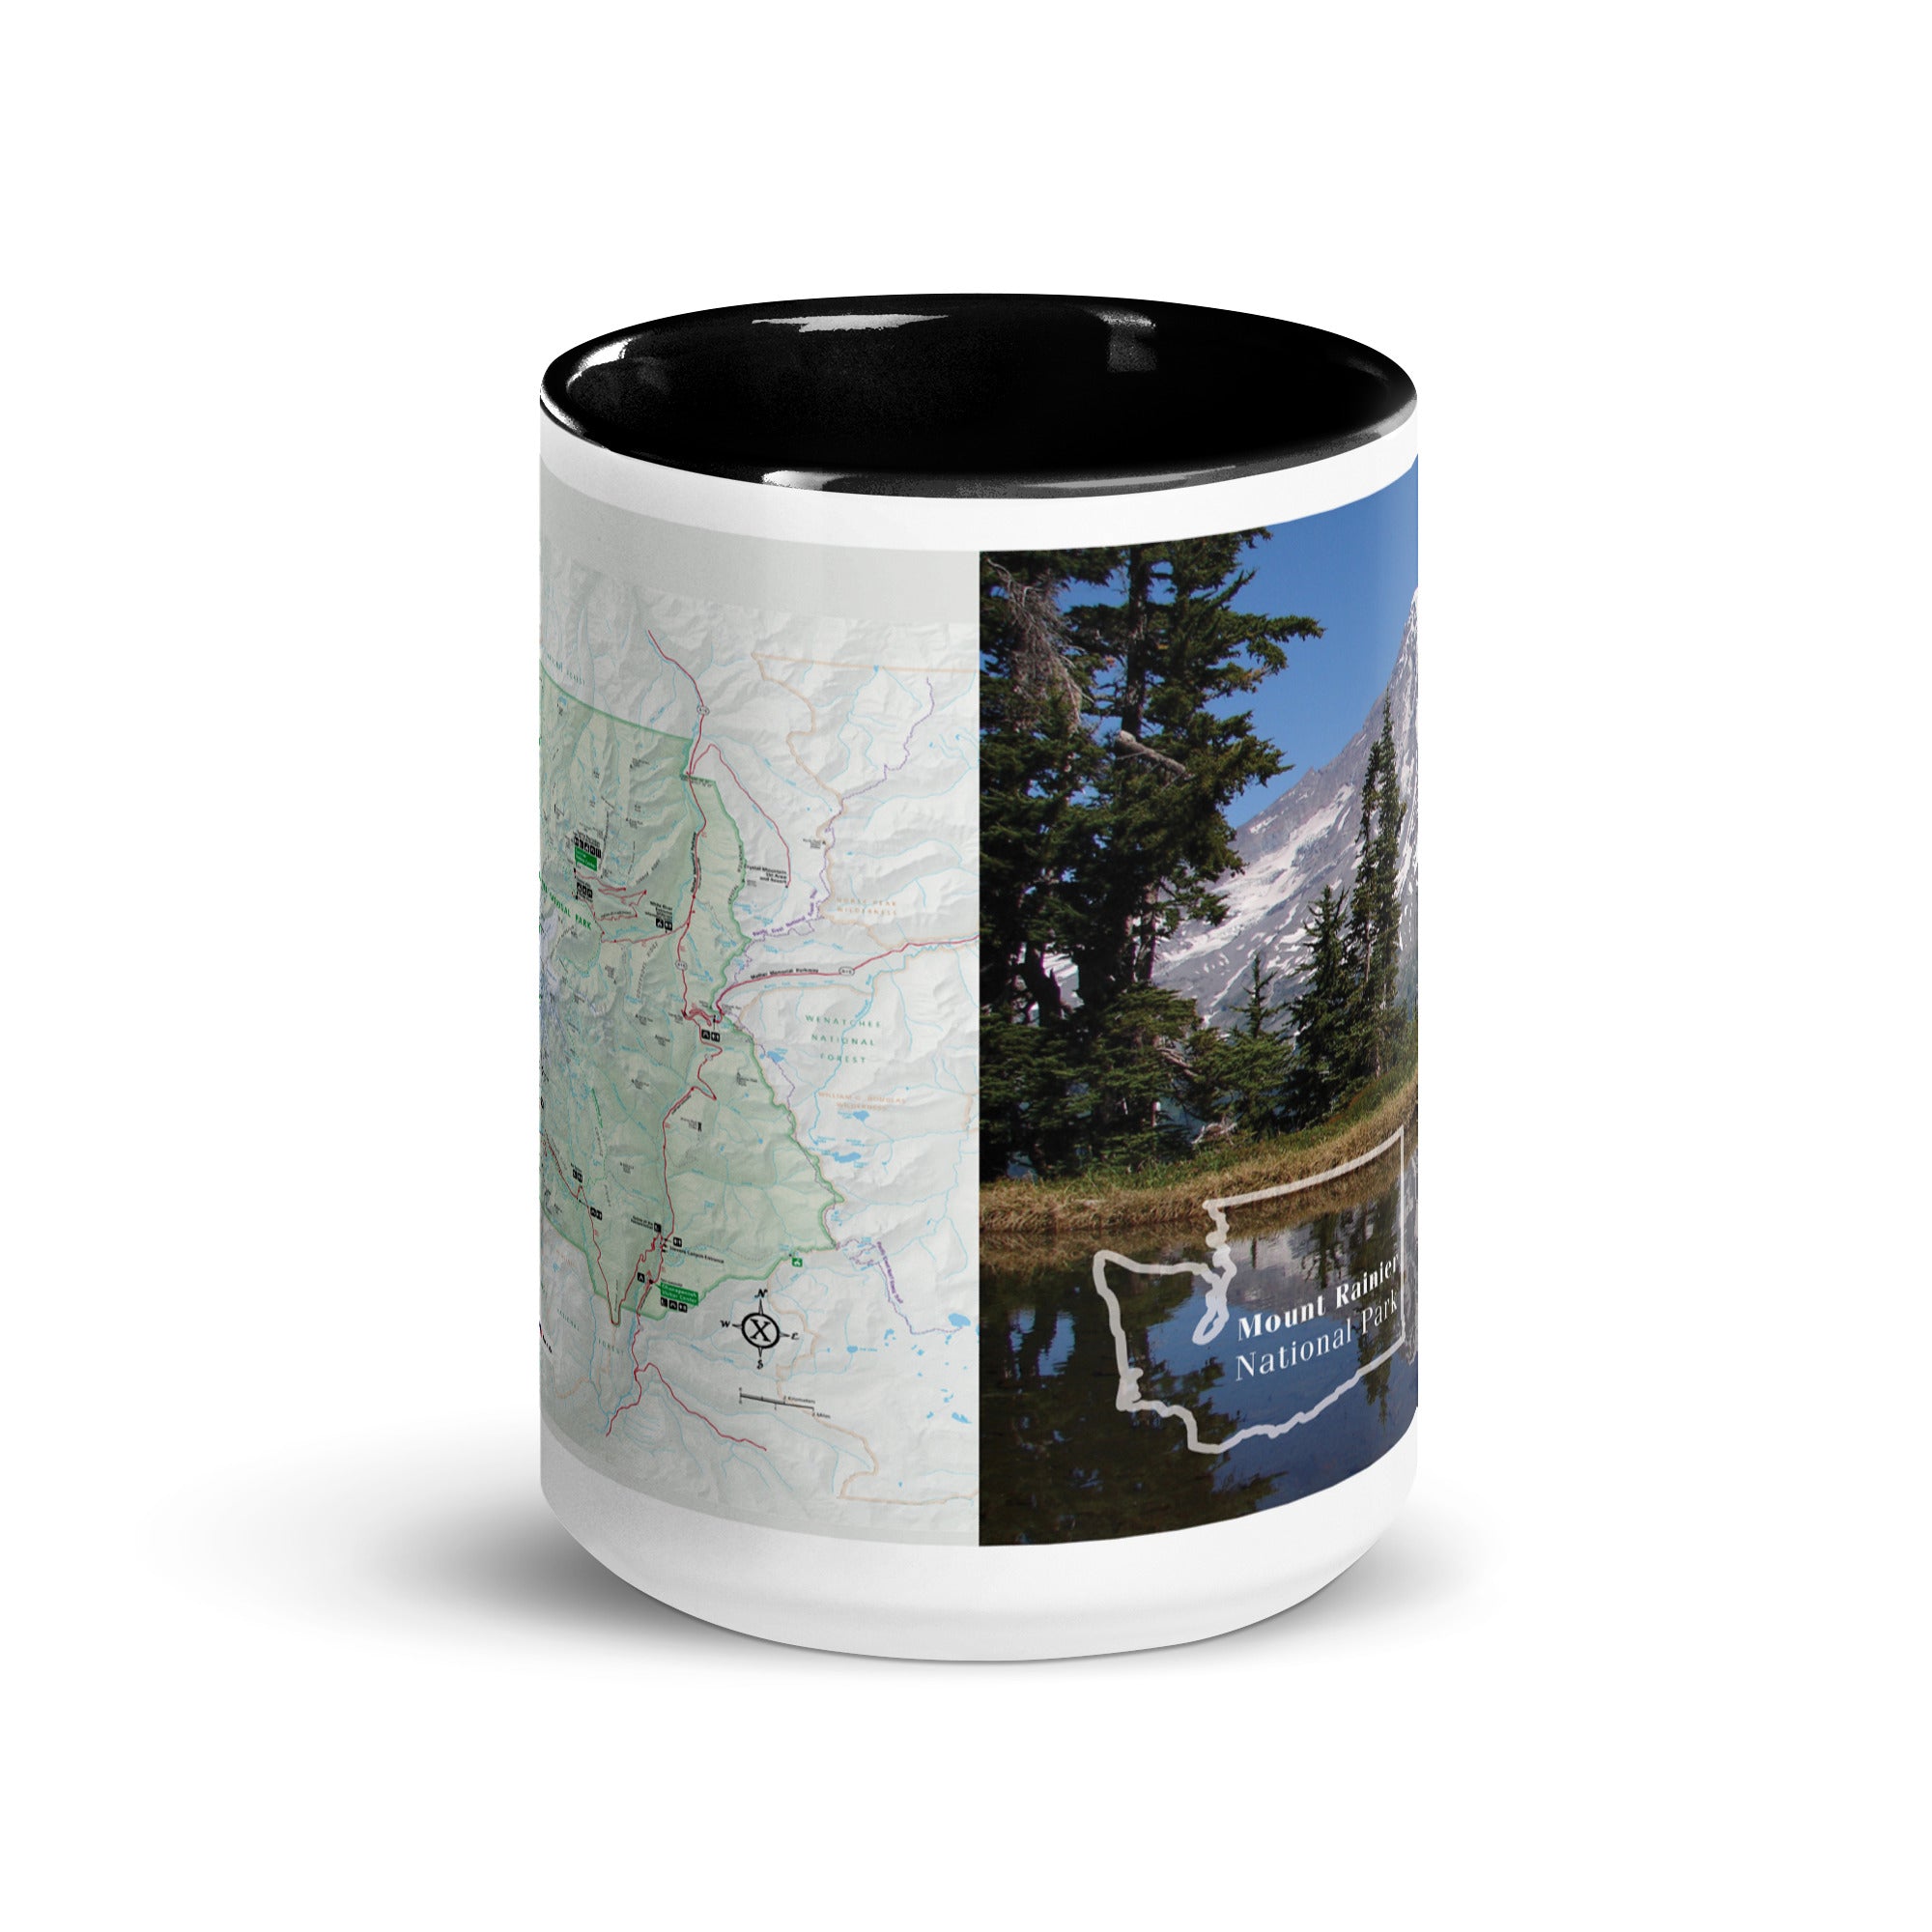 Mount Rainier National Park Mug with Black Inside